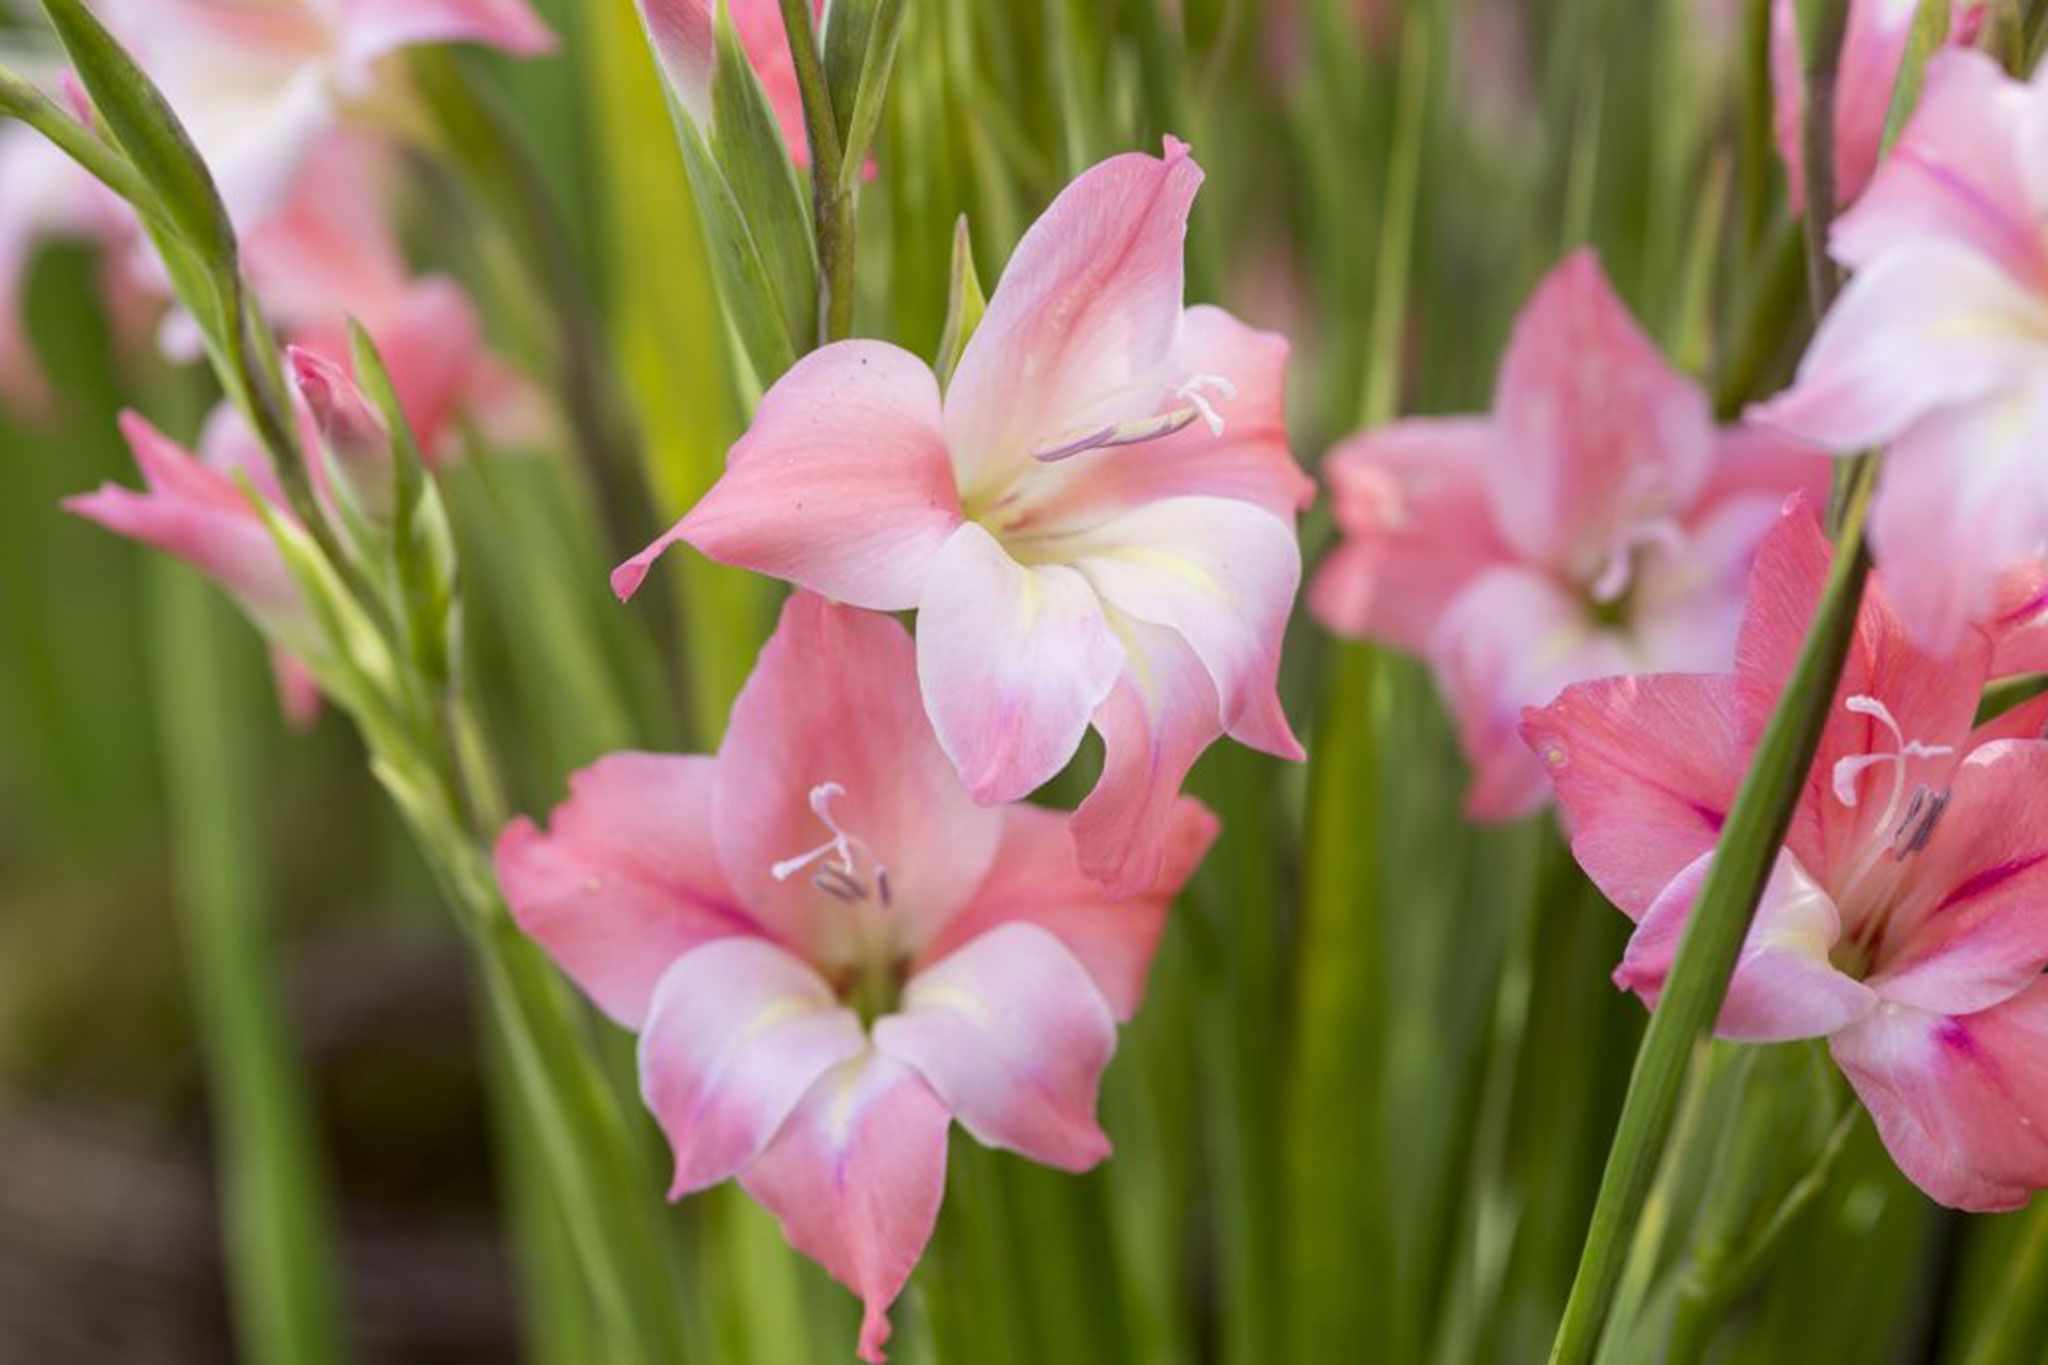 Nanus Gladiolus In Garden. Gardening: Flower and Vegetables